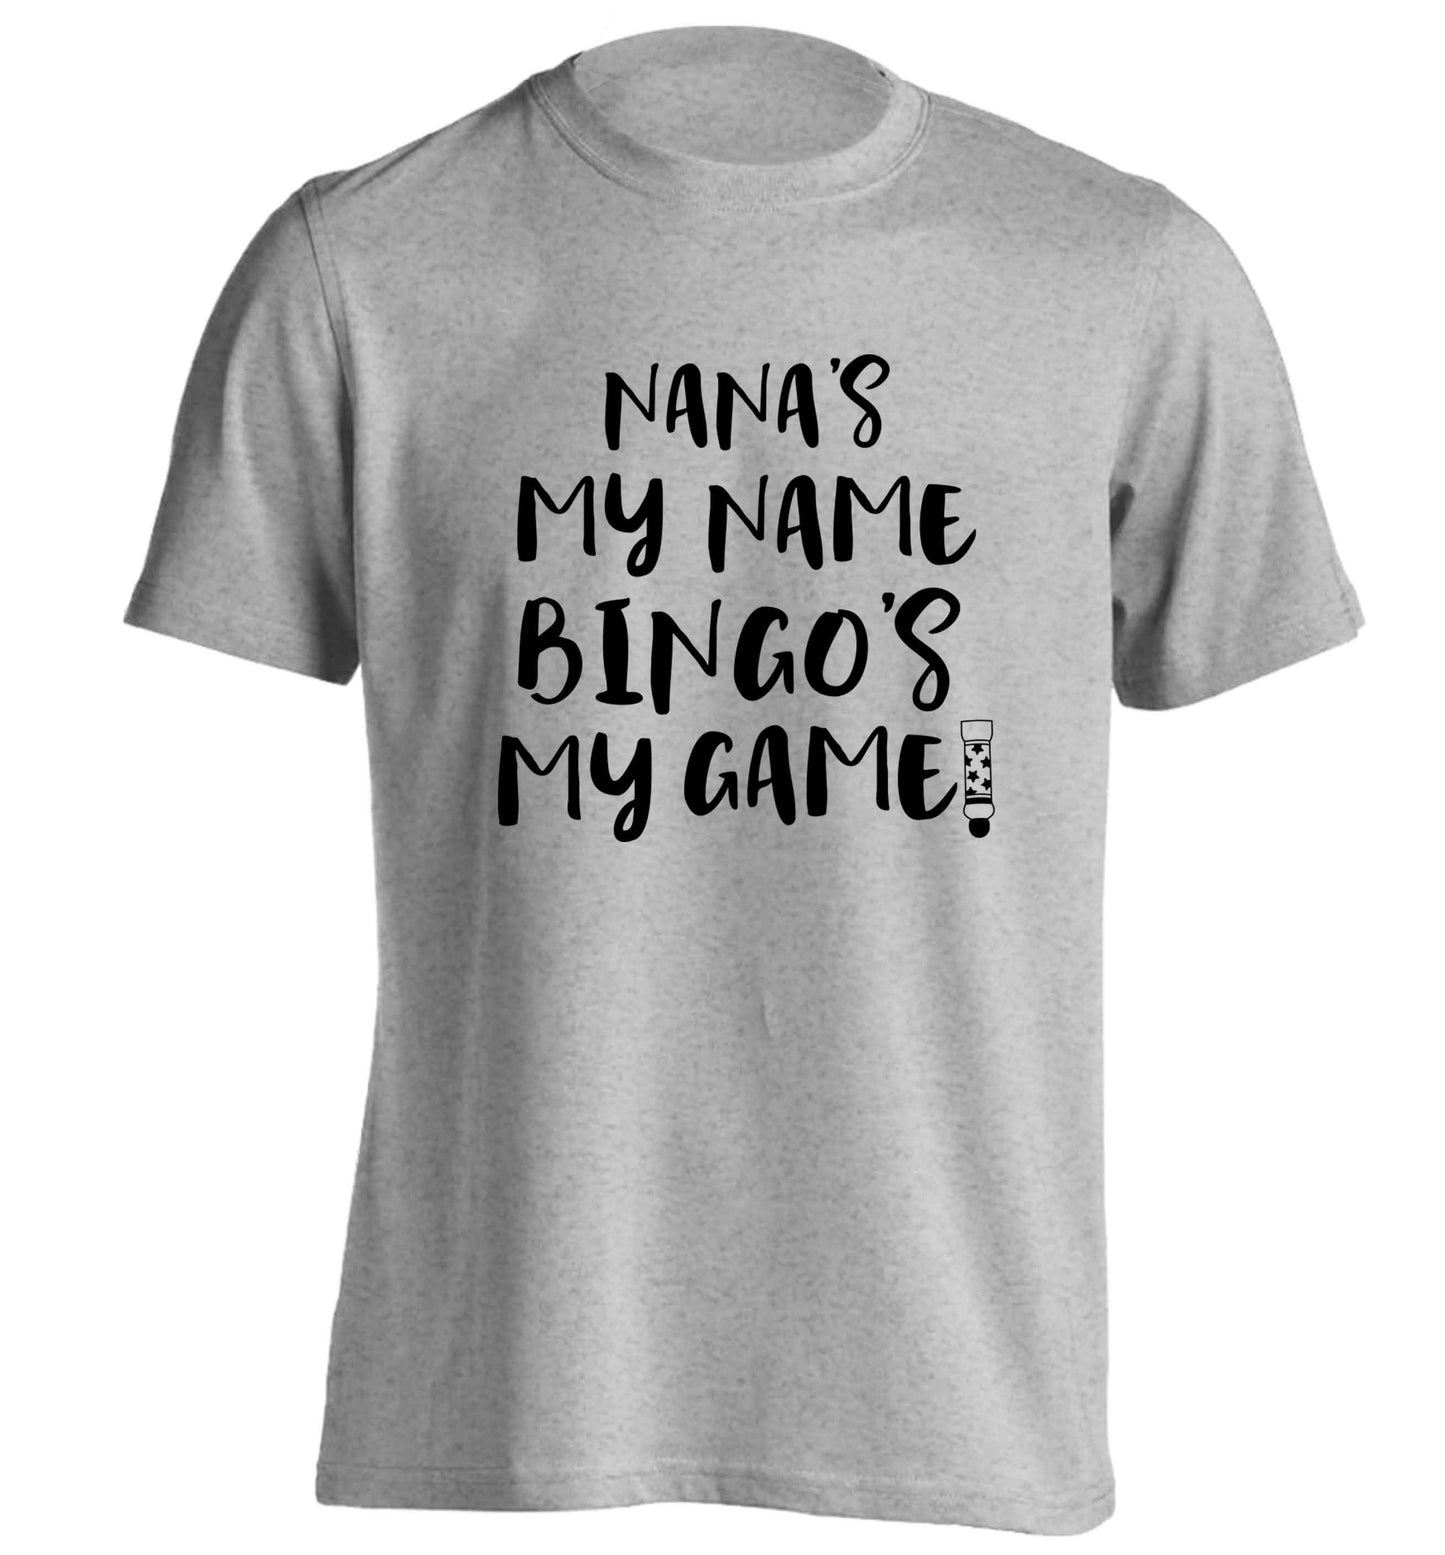 Nana's my name bingo's my game! adults unisex grey Tshirt 2XL